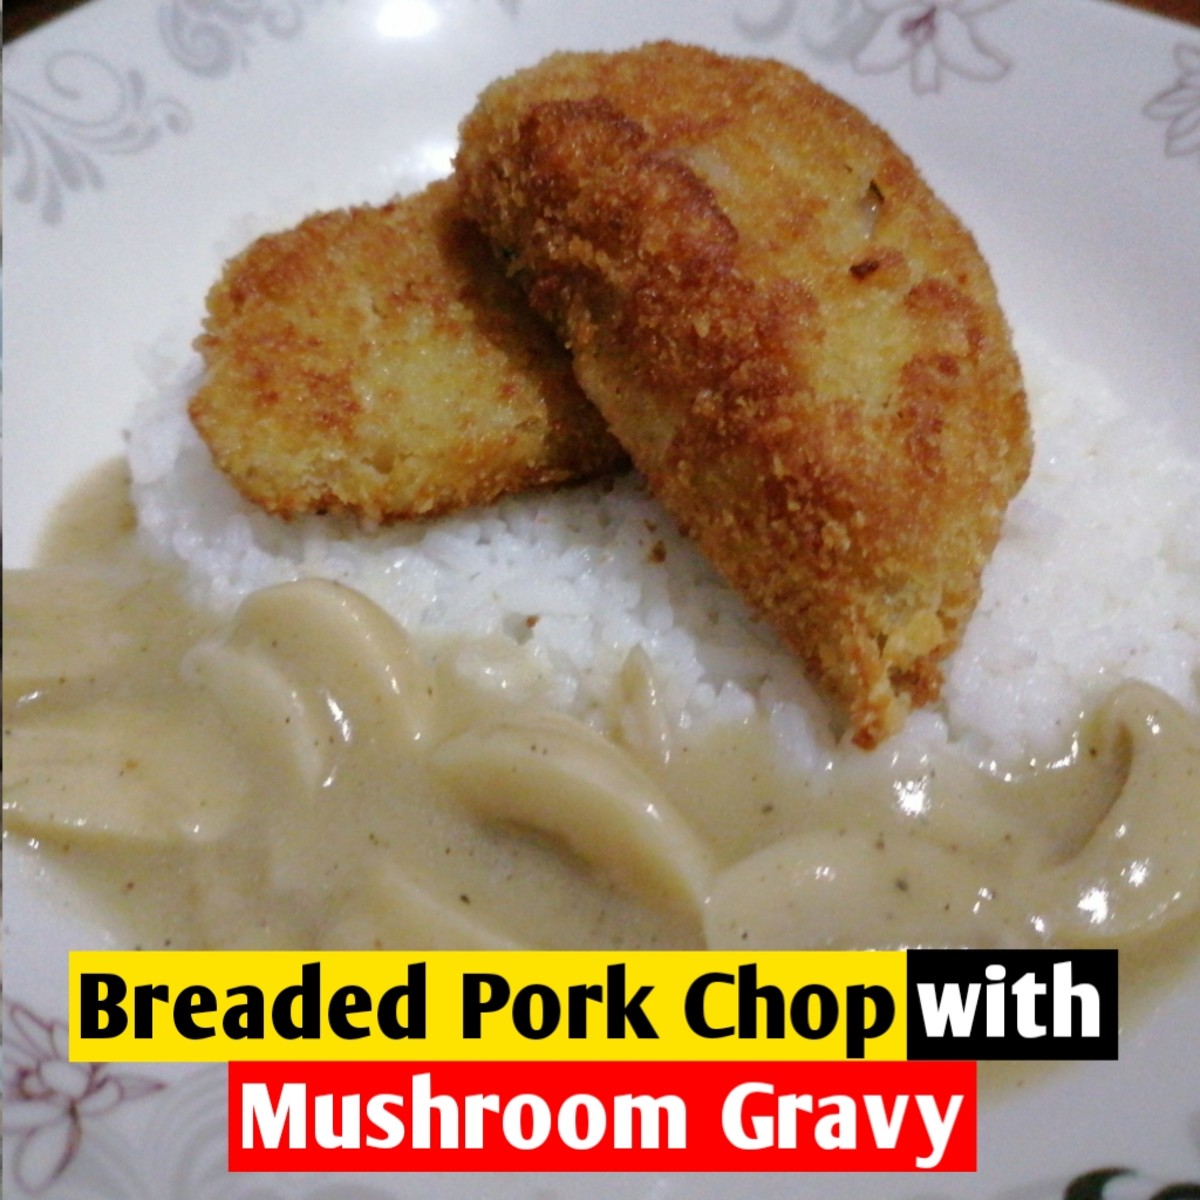 Breaded pork chop with mushroom gravy 